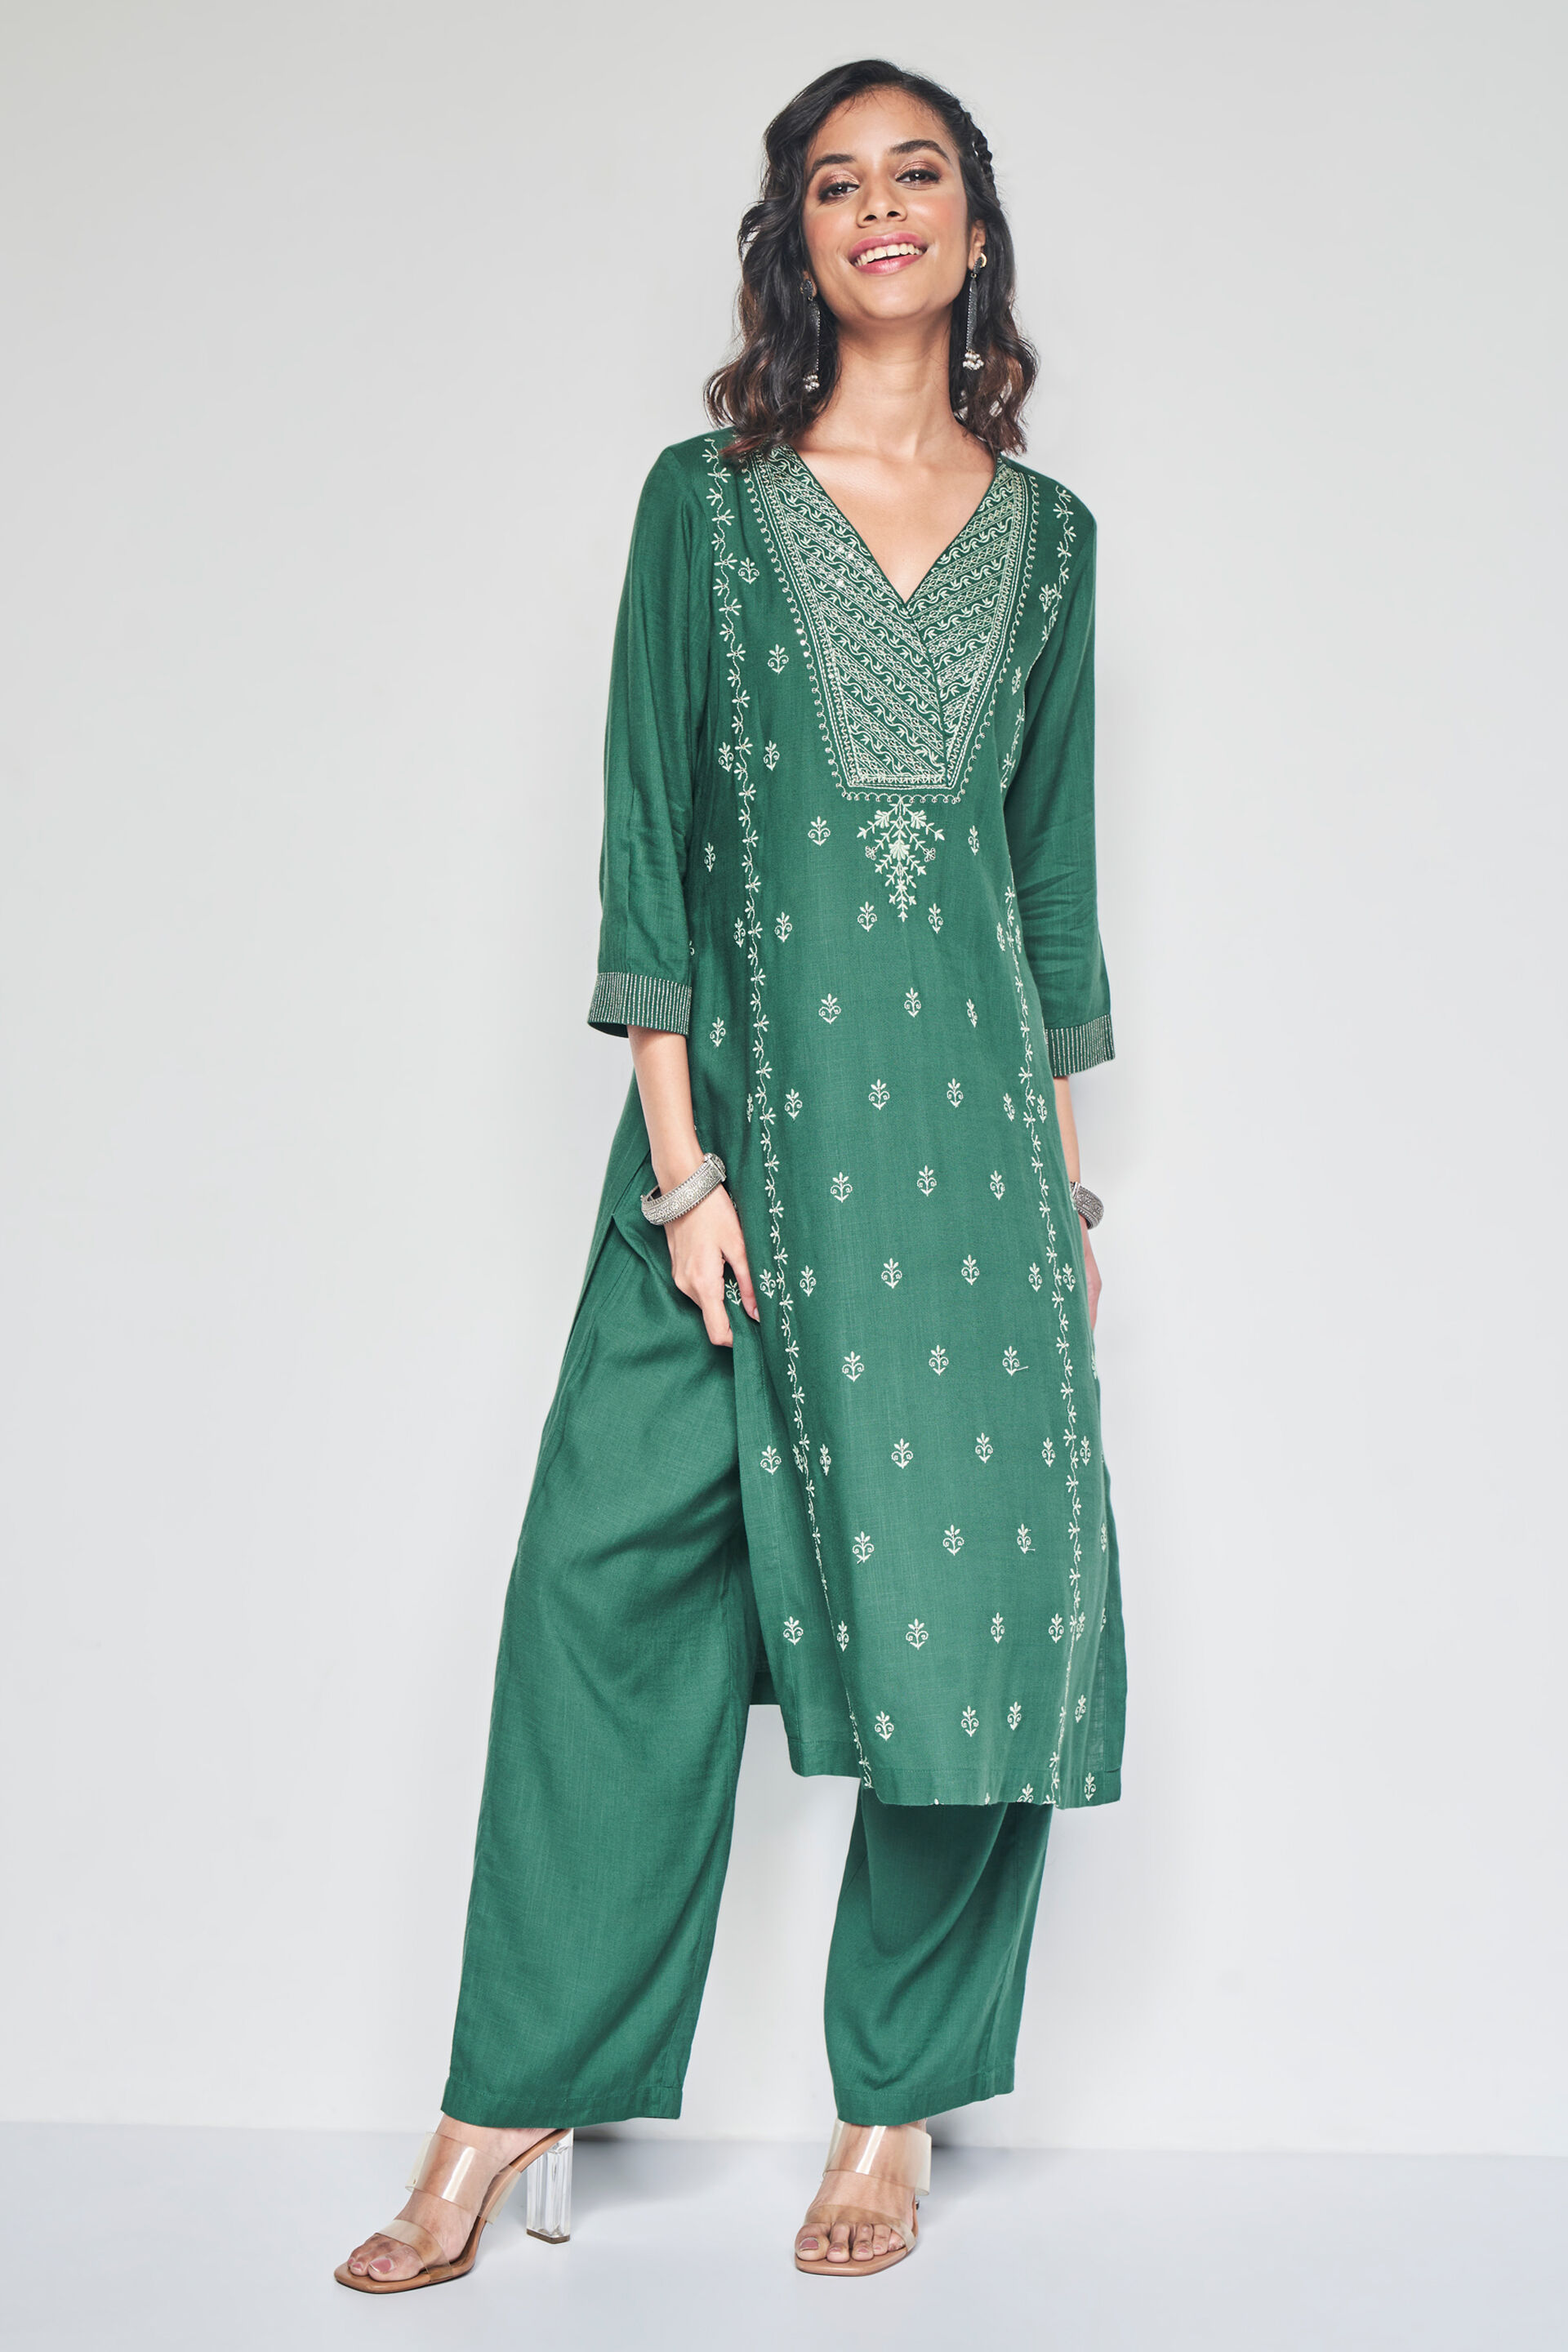 PATLANI Women's Cotton Blend Embroidered Straight Kurti Palazzo Pants Set  with Dupatta.(Line-Green-S) : Amazon.in: Fashion